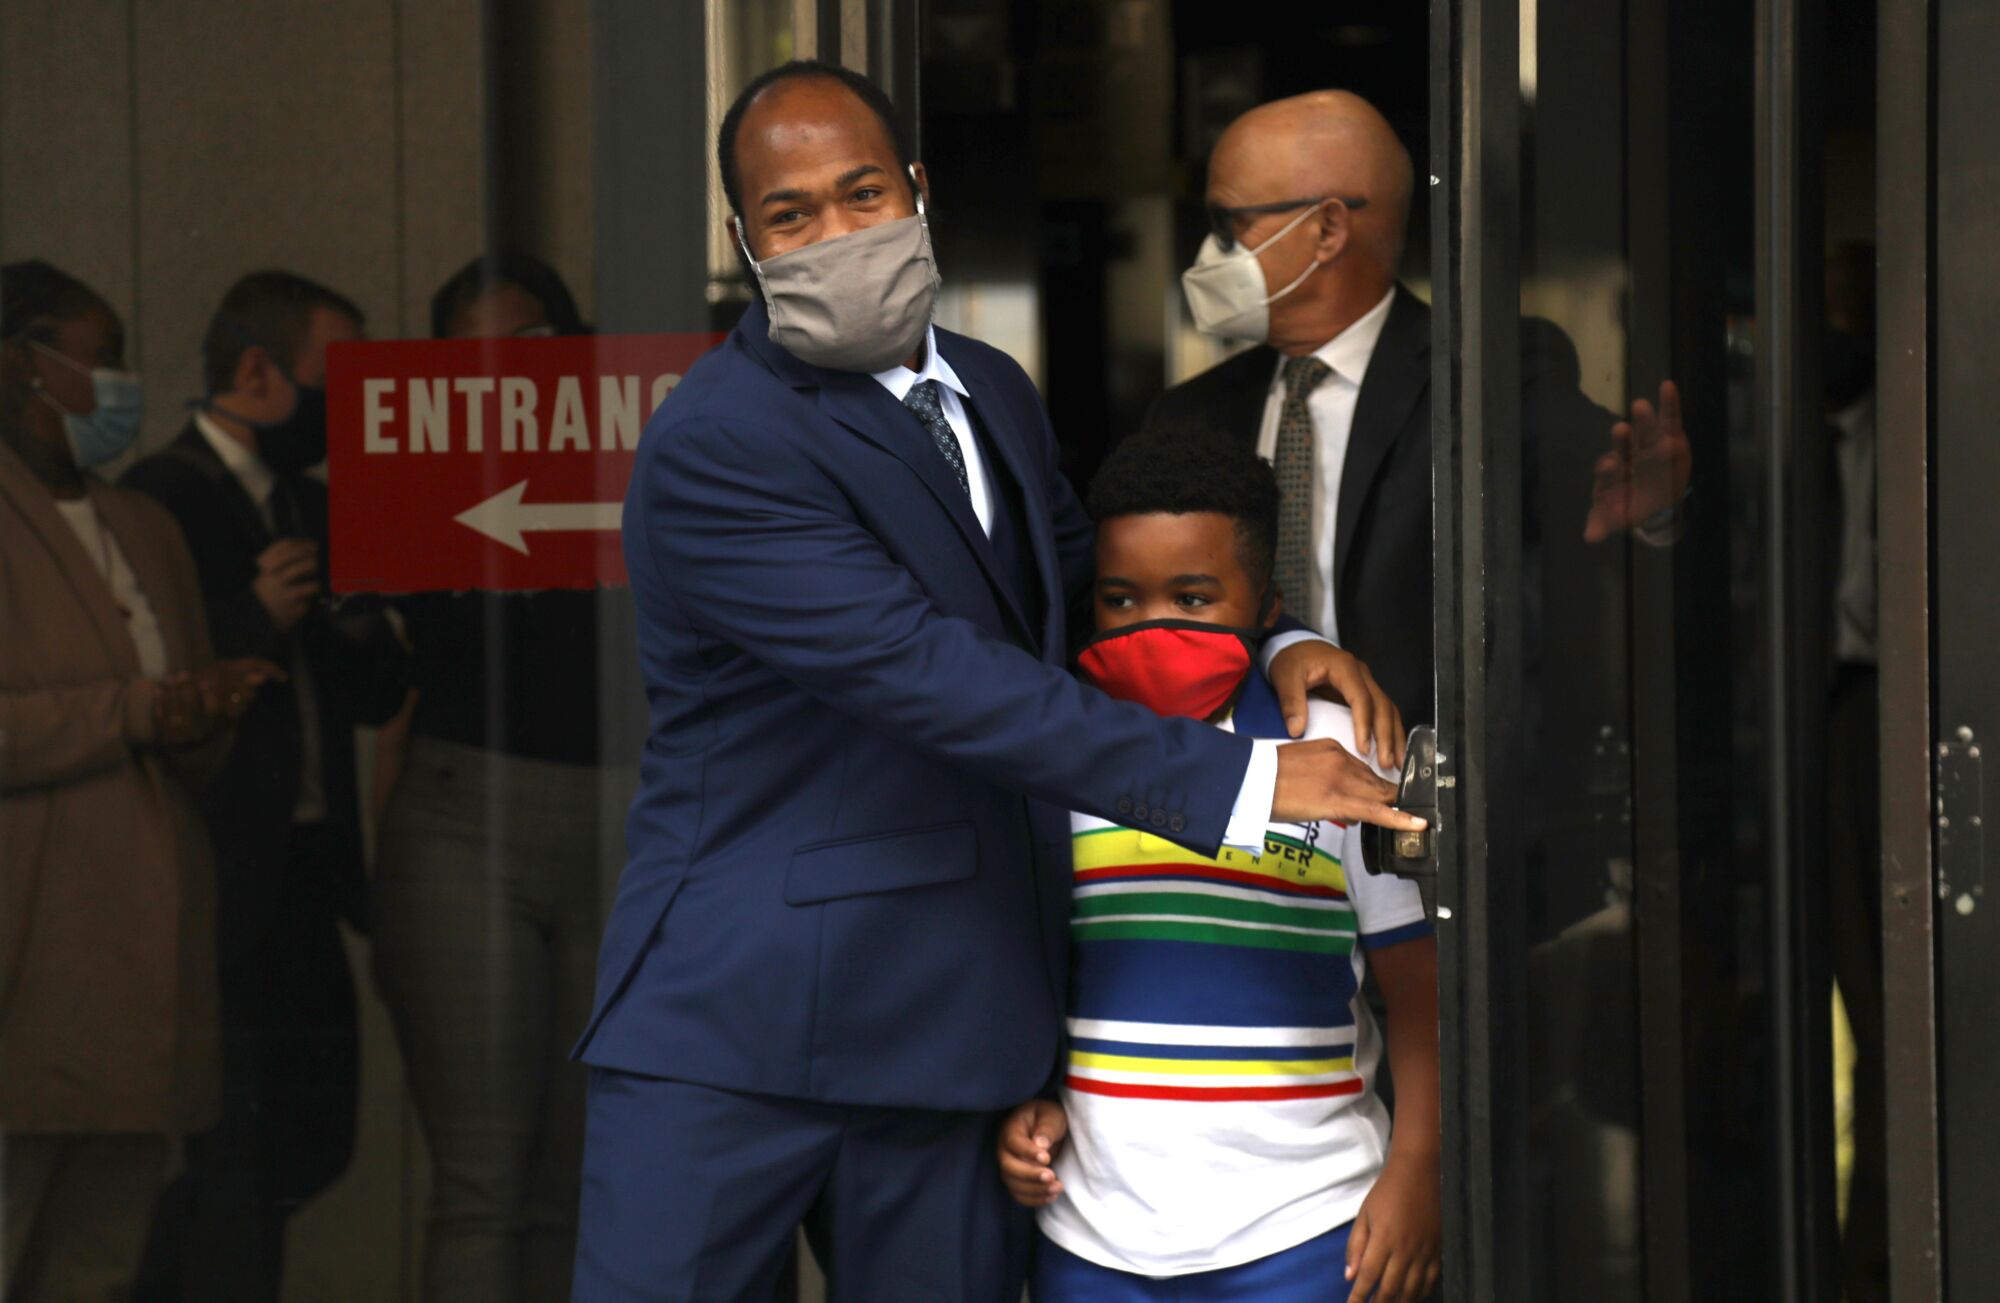 Derrick Harris walks out of a court building with his son Derrick Jr., 9.